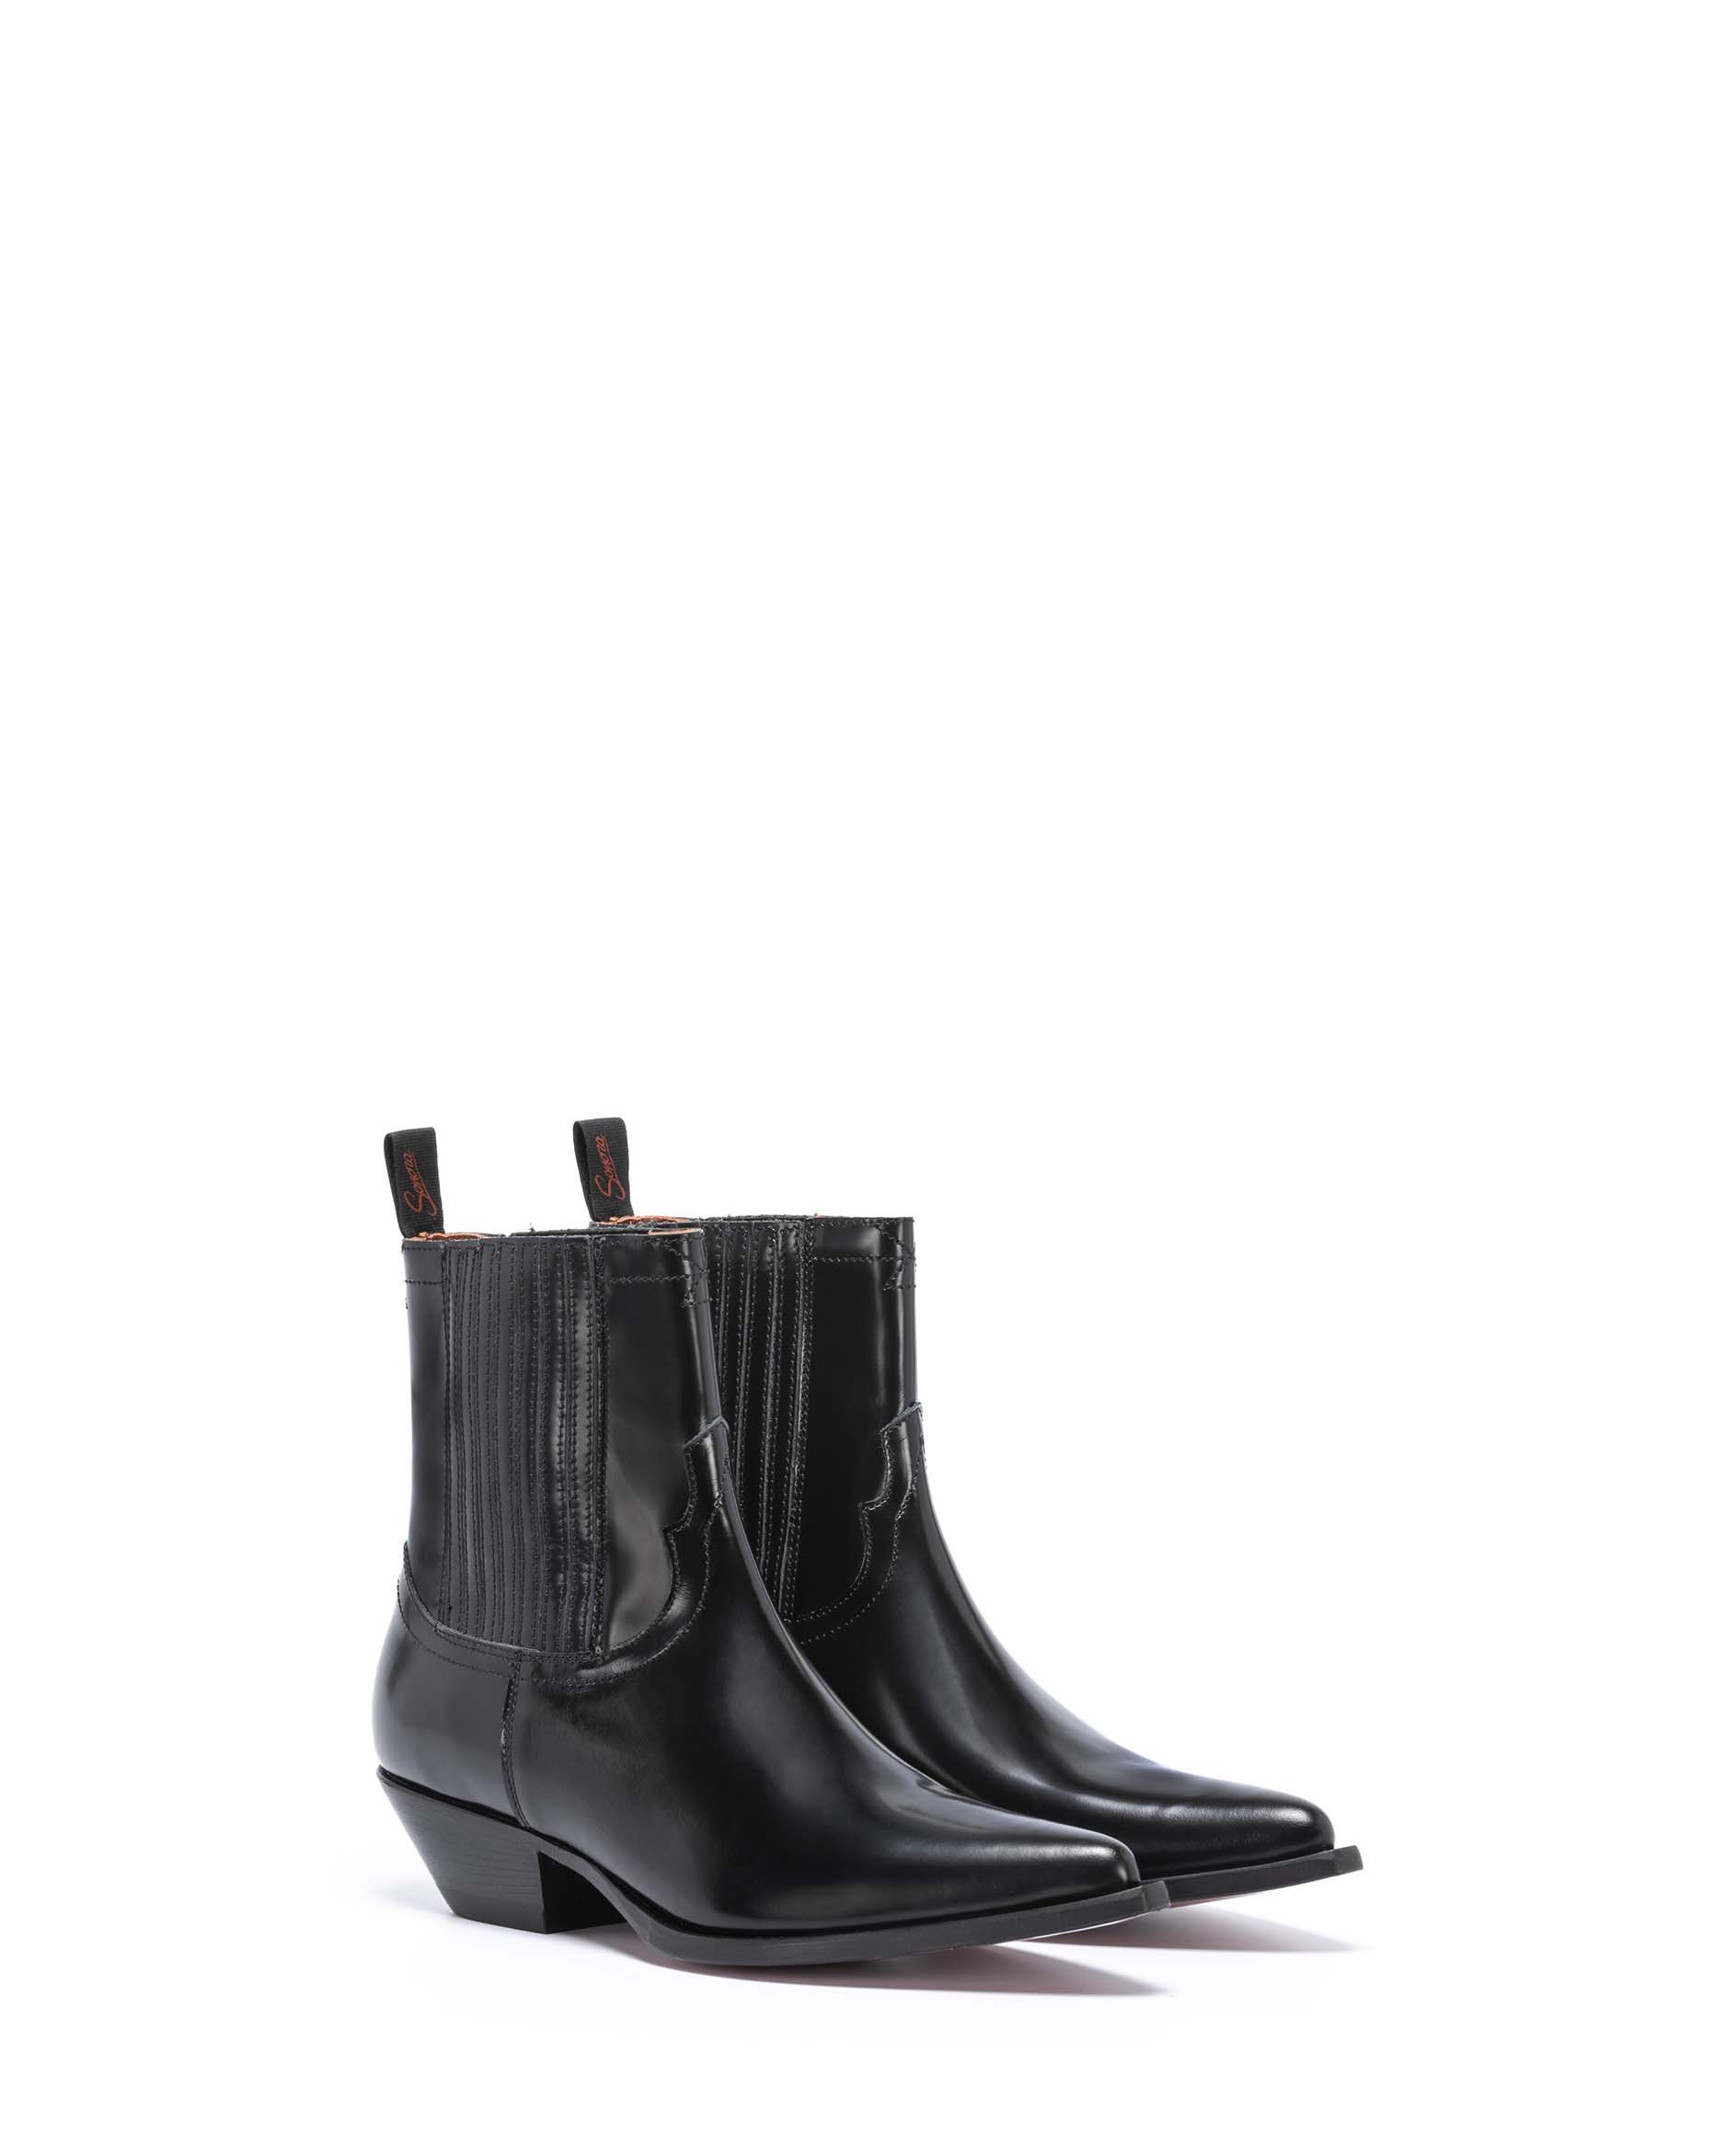 HIDALGO Men's Ankle Boots in Black Brushed Calfskin_Front_01